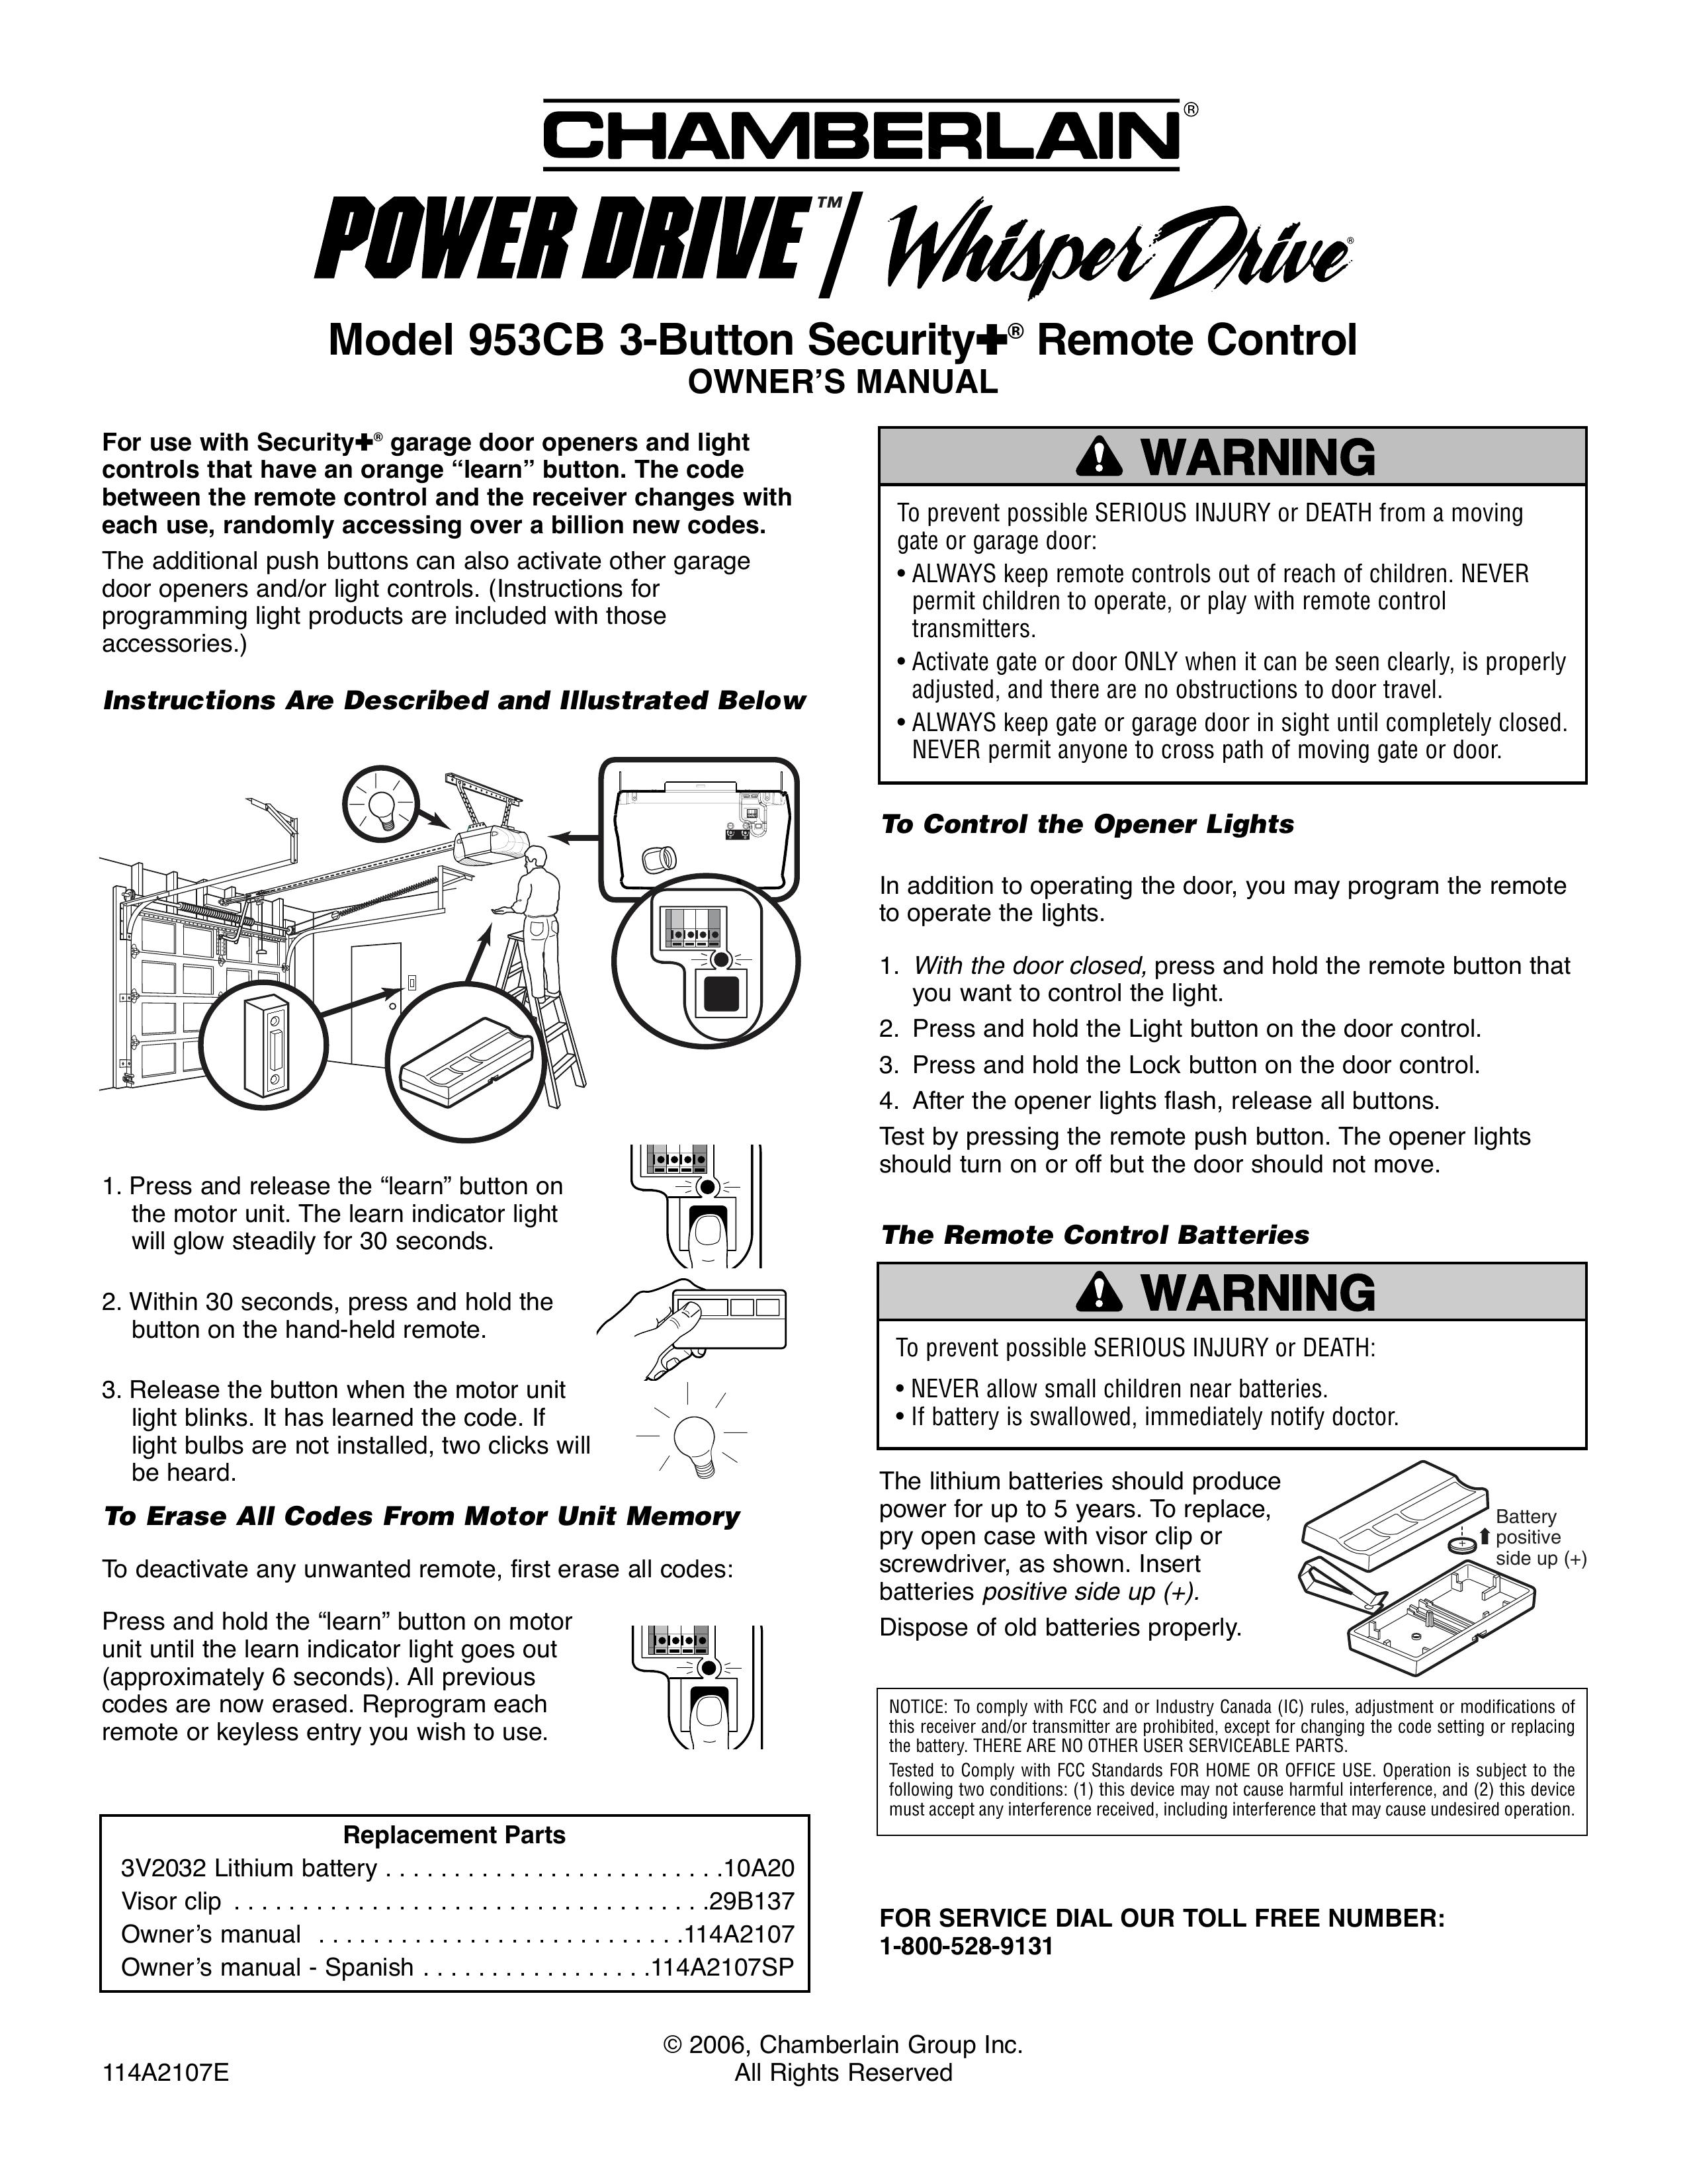 Chamberlain 953CB Washer/Dryer User Manual